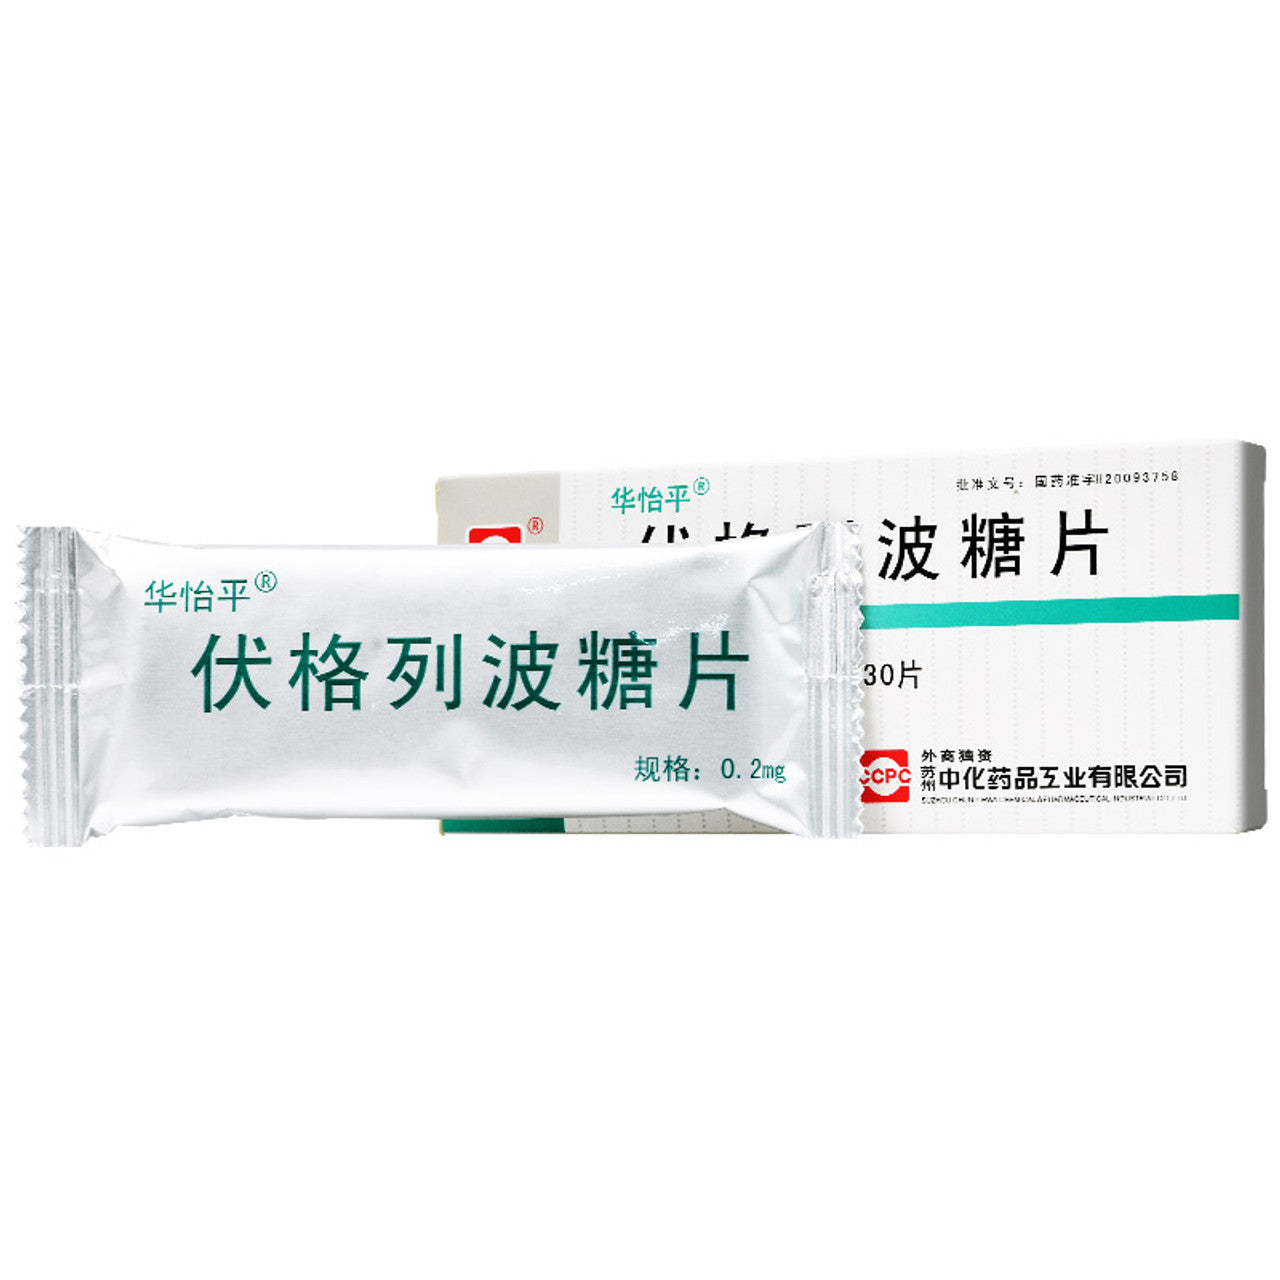 Hua Yi Ping Fu Ge Lie Bo Tang Pian / Voglibose tablets For Diabetes 0.2mg*30 Tablets*5 boxes